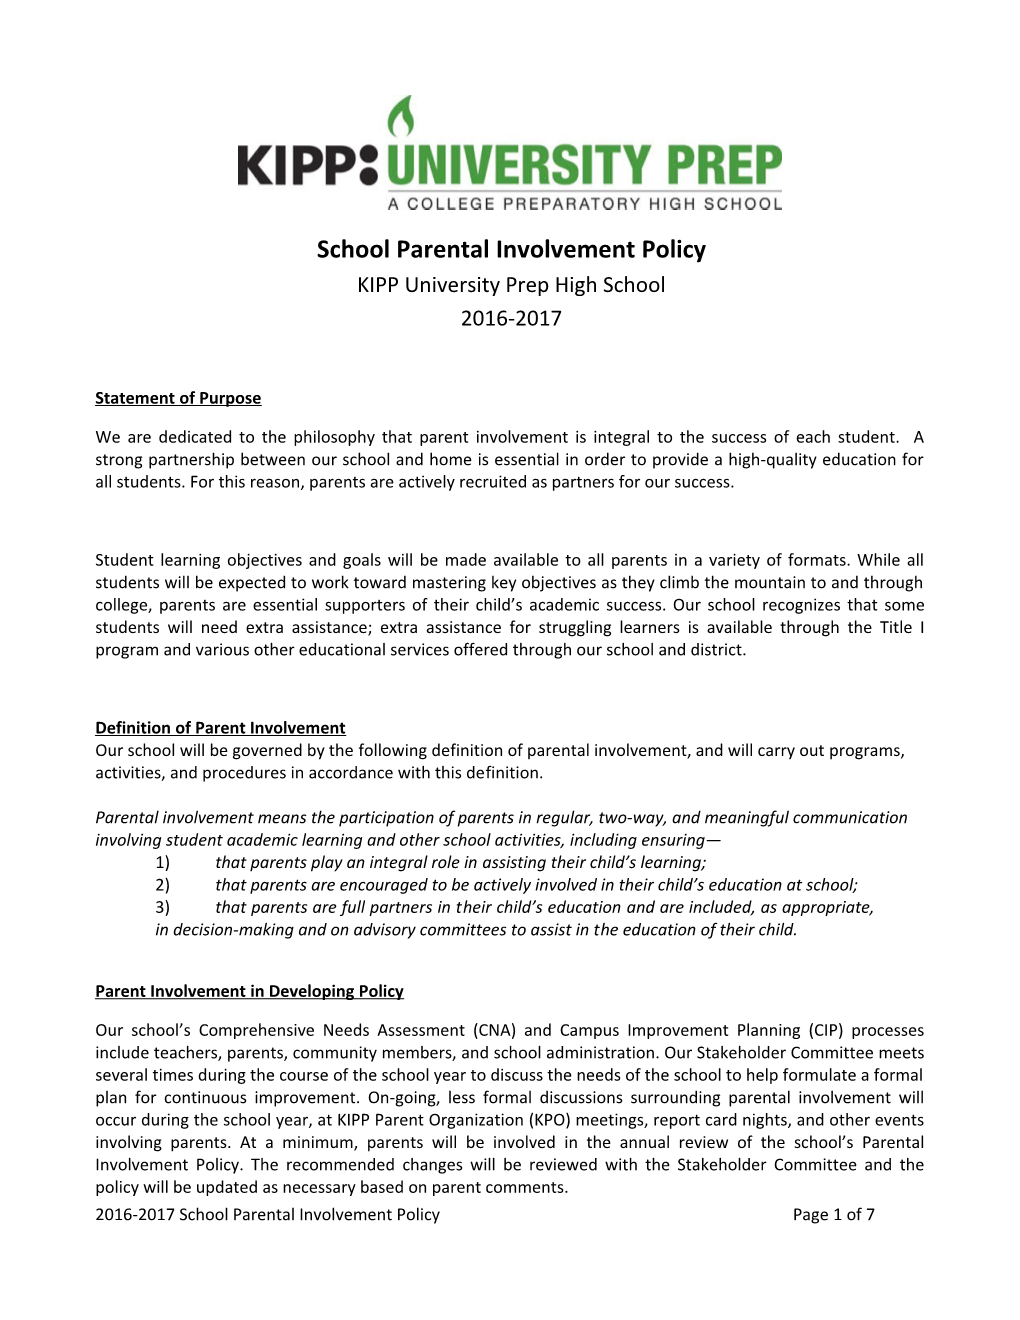 KIPP University Prep High School